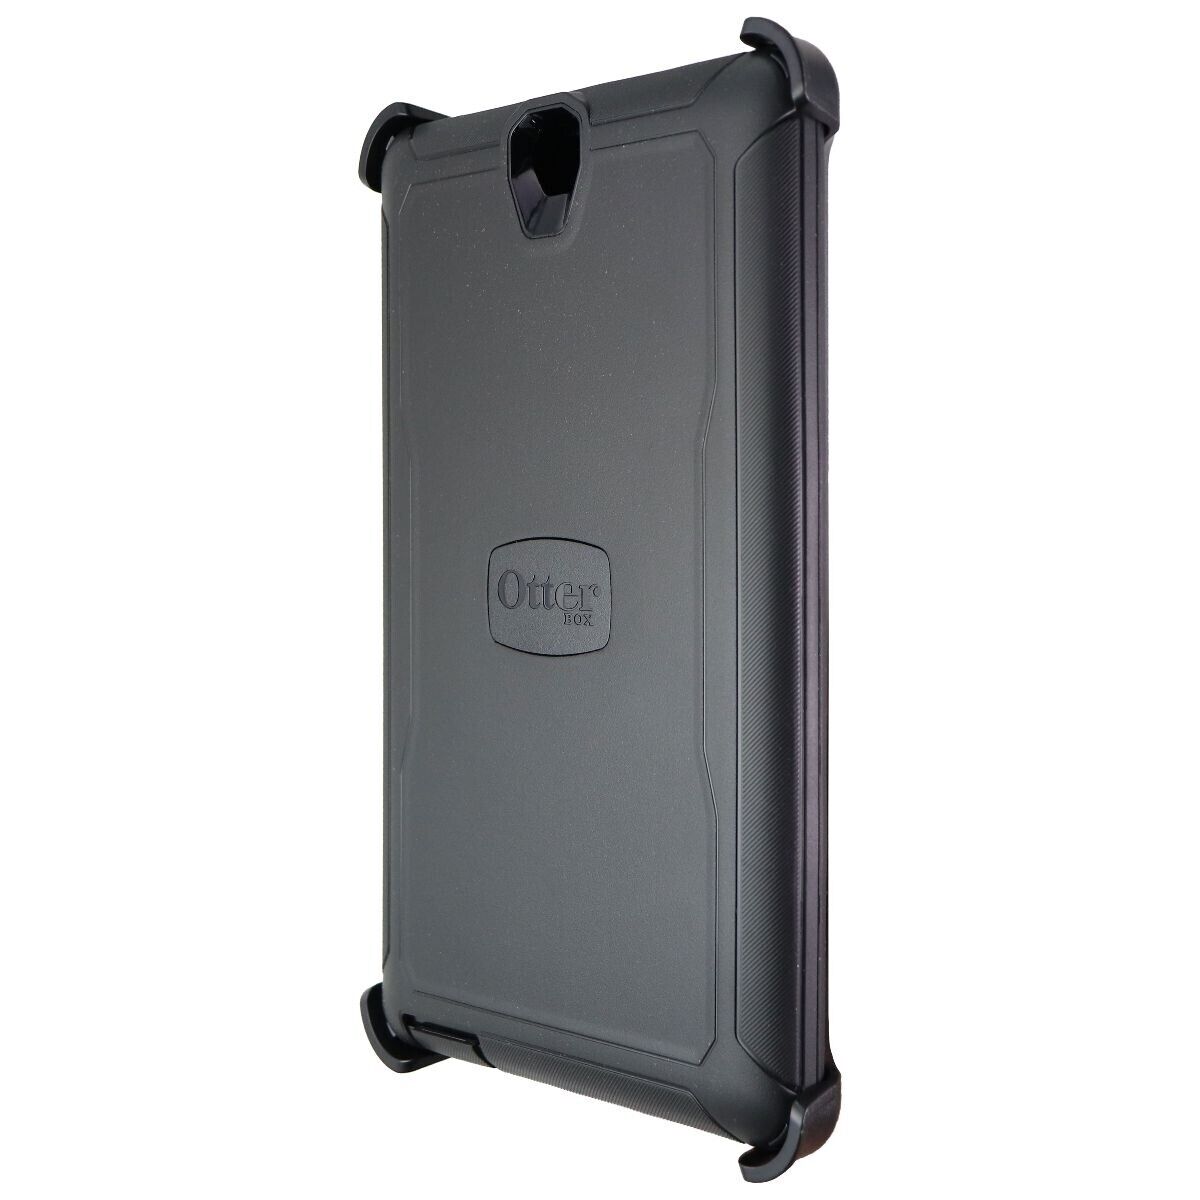 OtterBox Defender Series Rugged Case for Verizon Ellipsis 8 HD Tablet - Black